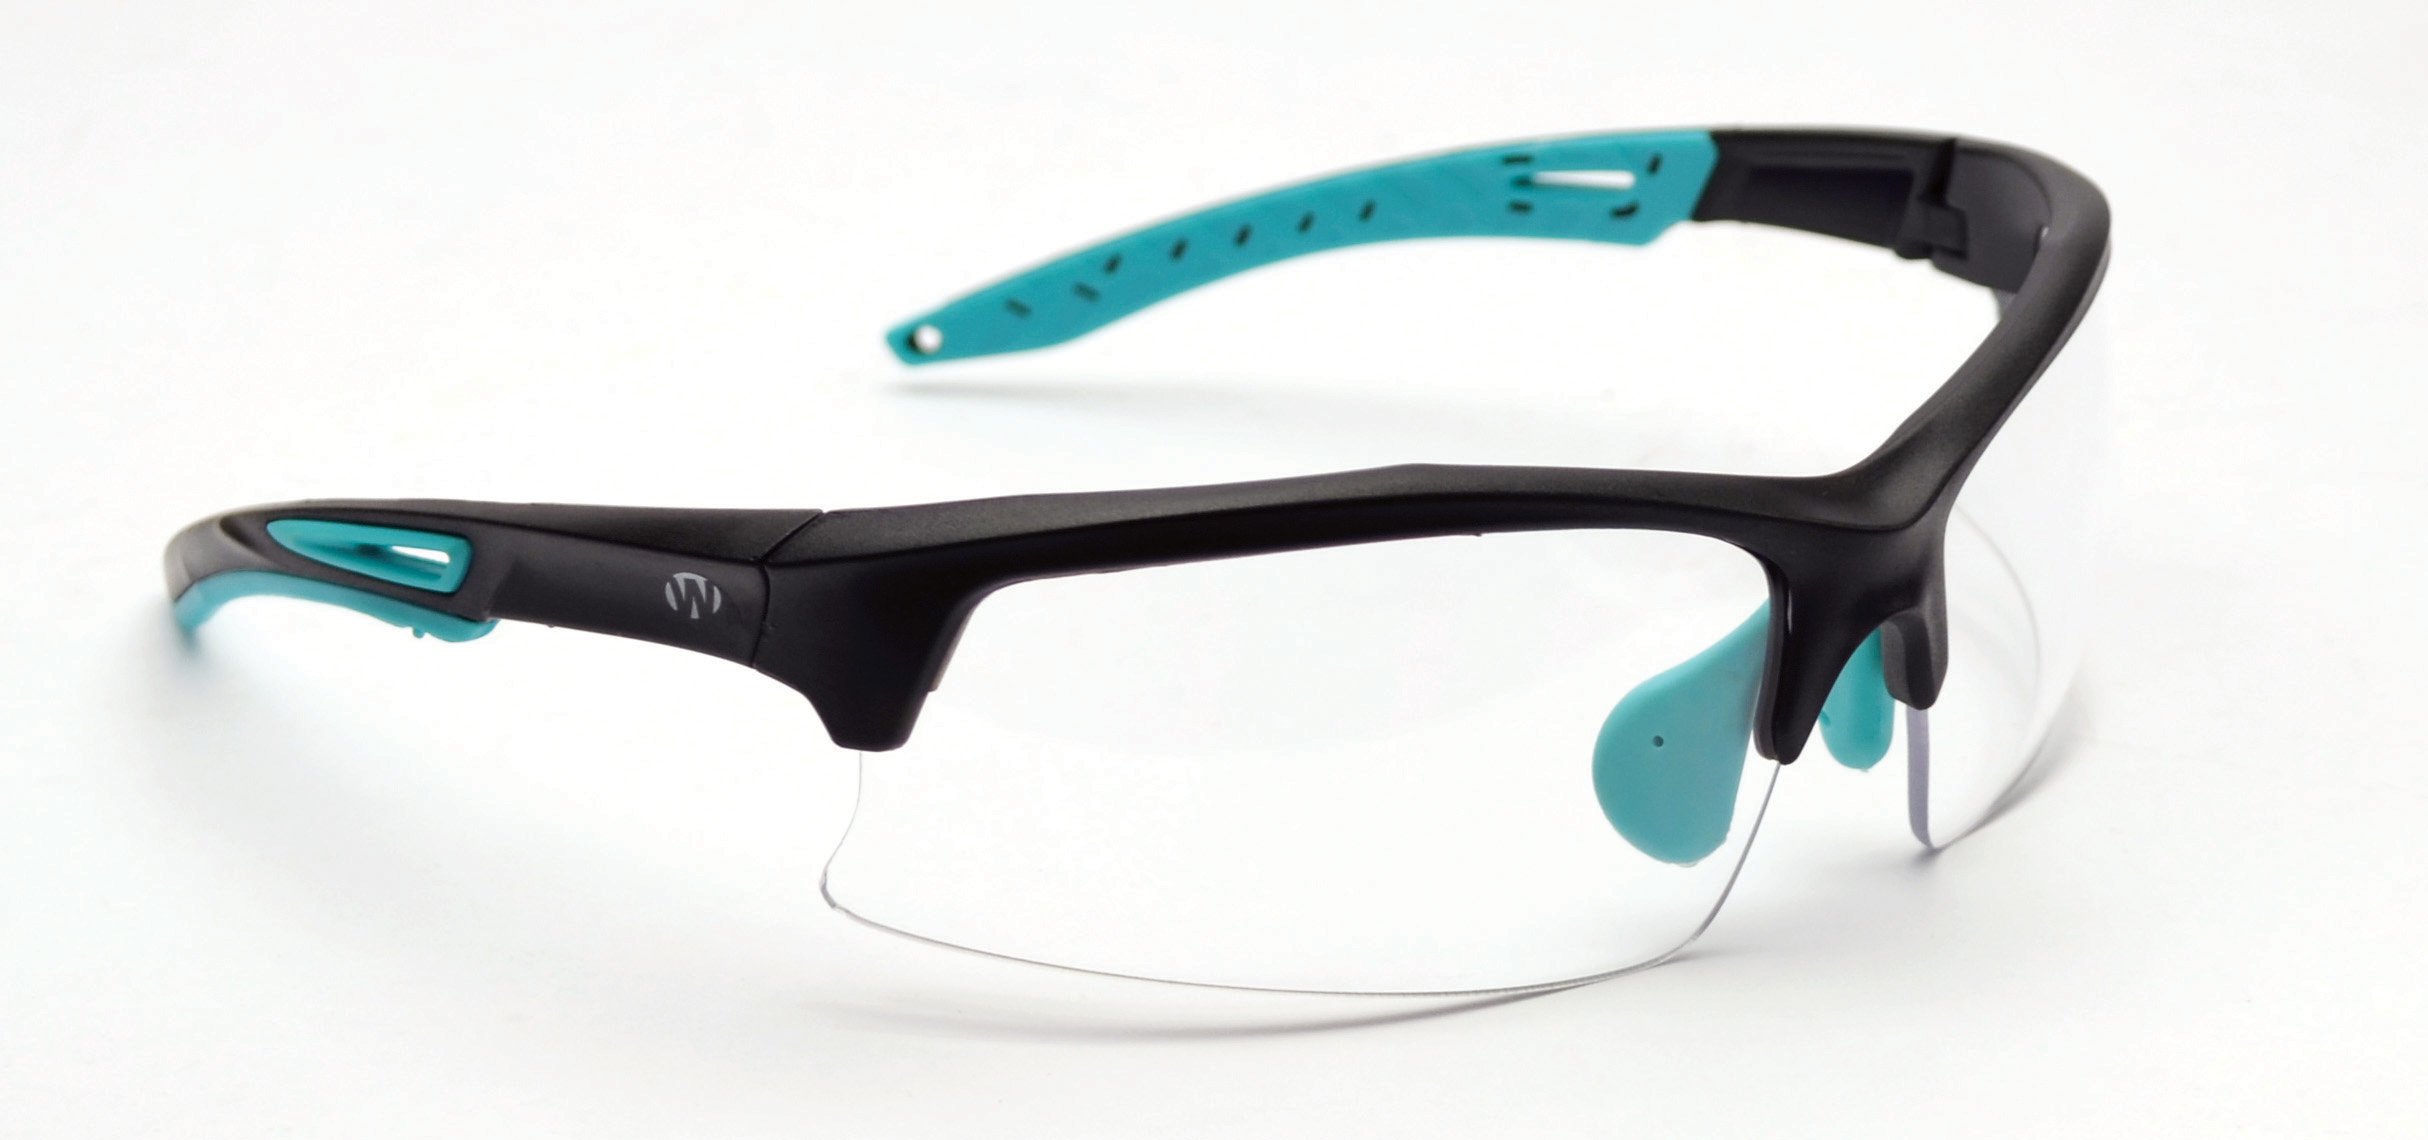 TEAL Impact Resistant Sport Glasses - Walker's